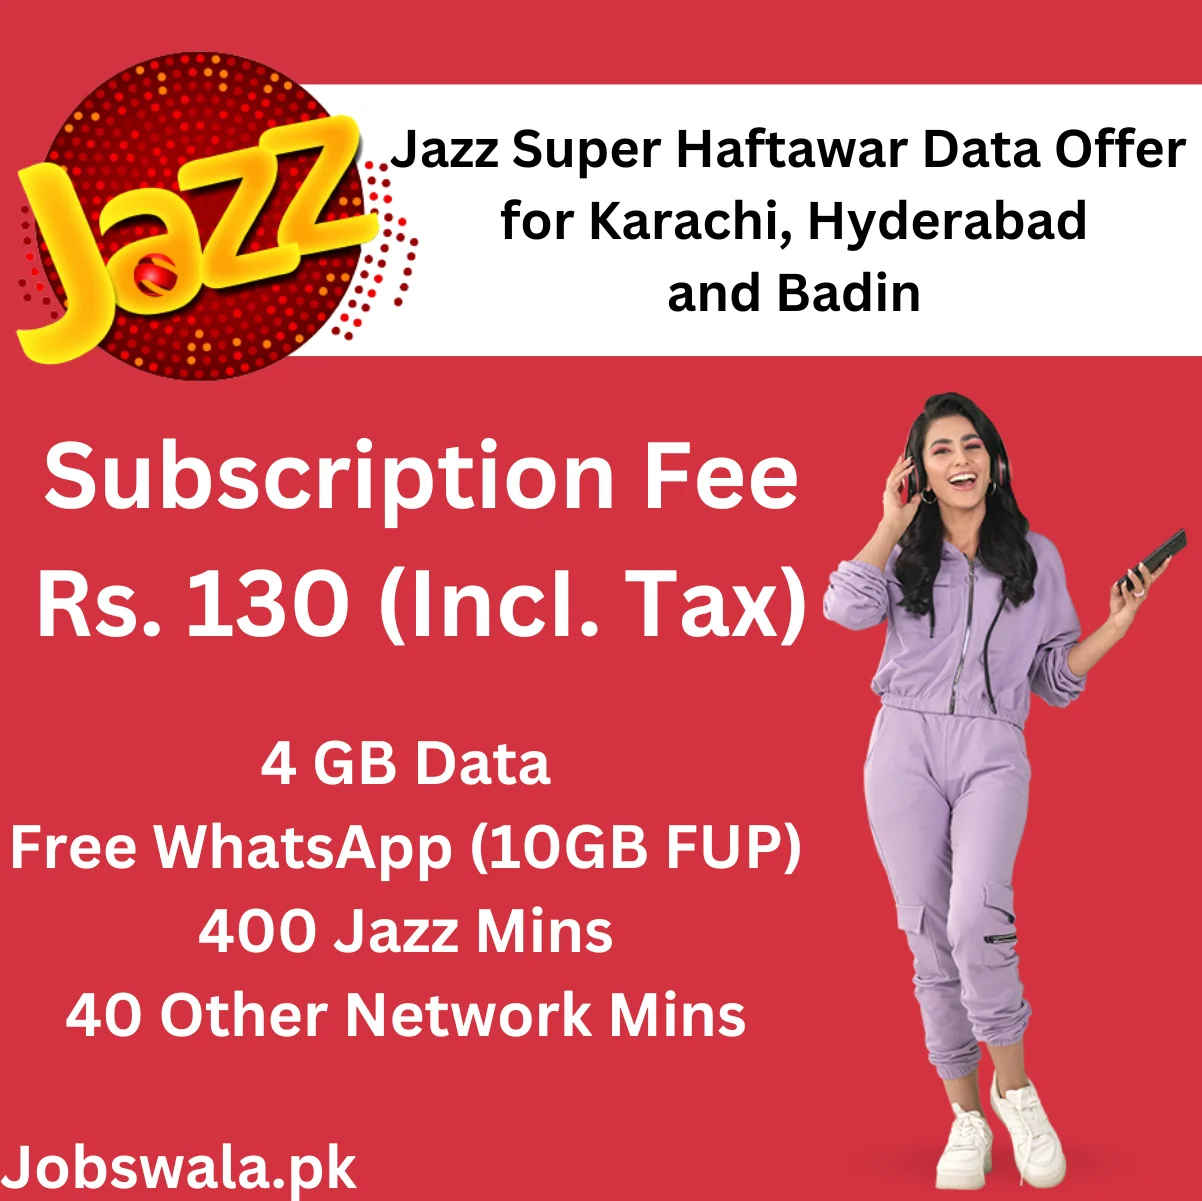 Jazz Super Haftawar Data Offer for Karachi, Hyderabad and Badin